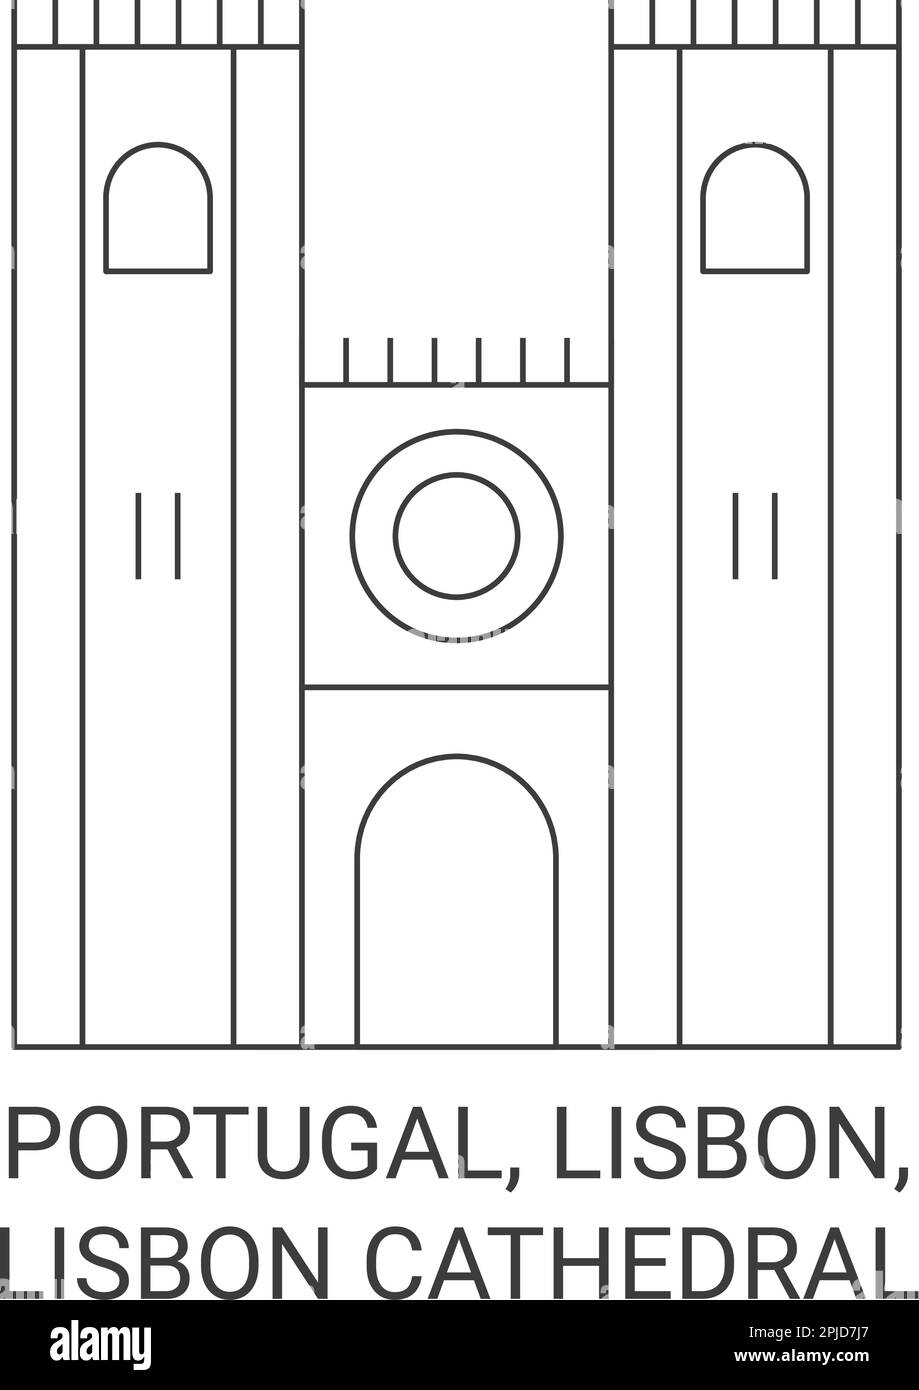 Portugal, Lisbon, Lisbon Cathedral travel landmark vector illustration Stock Vector